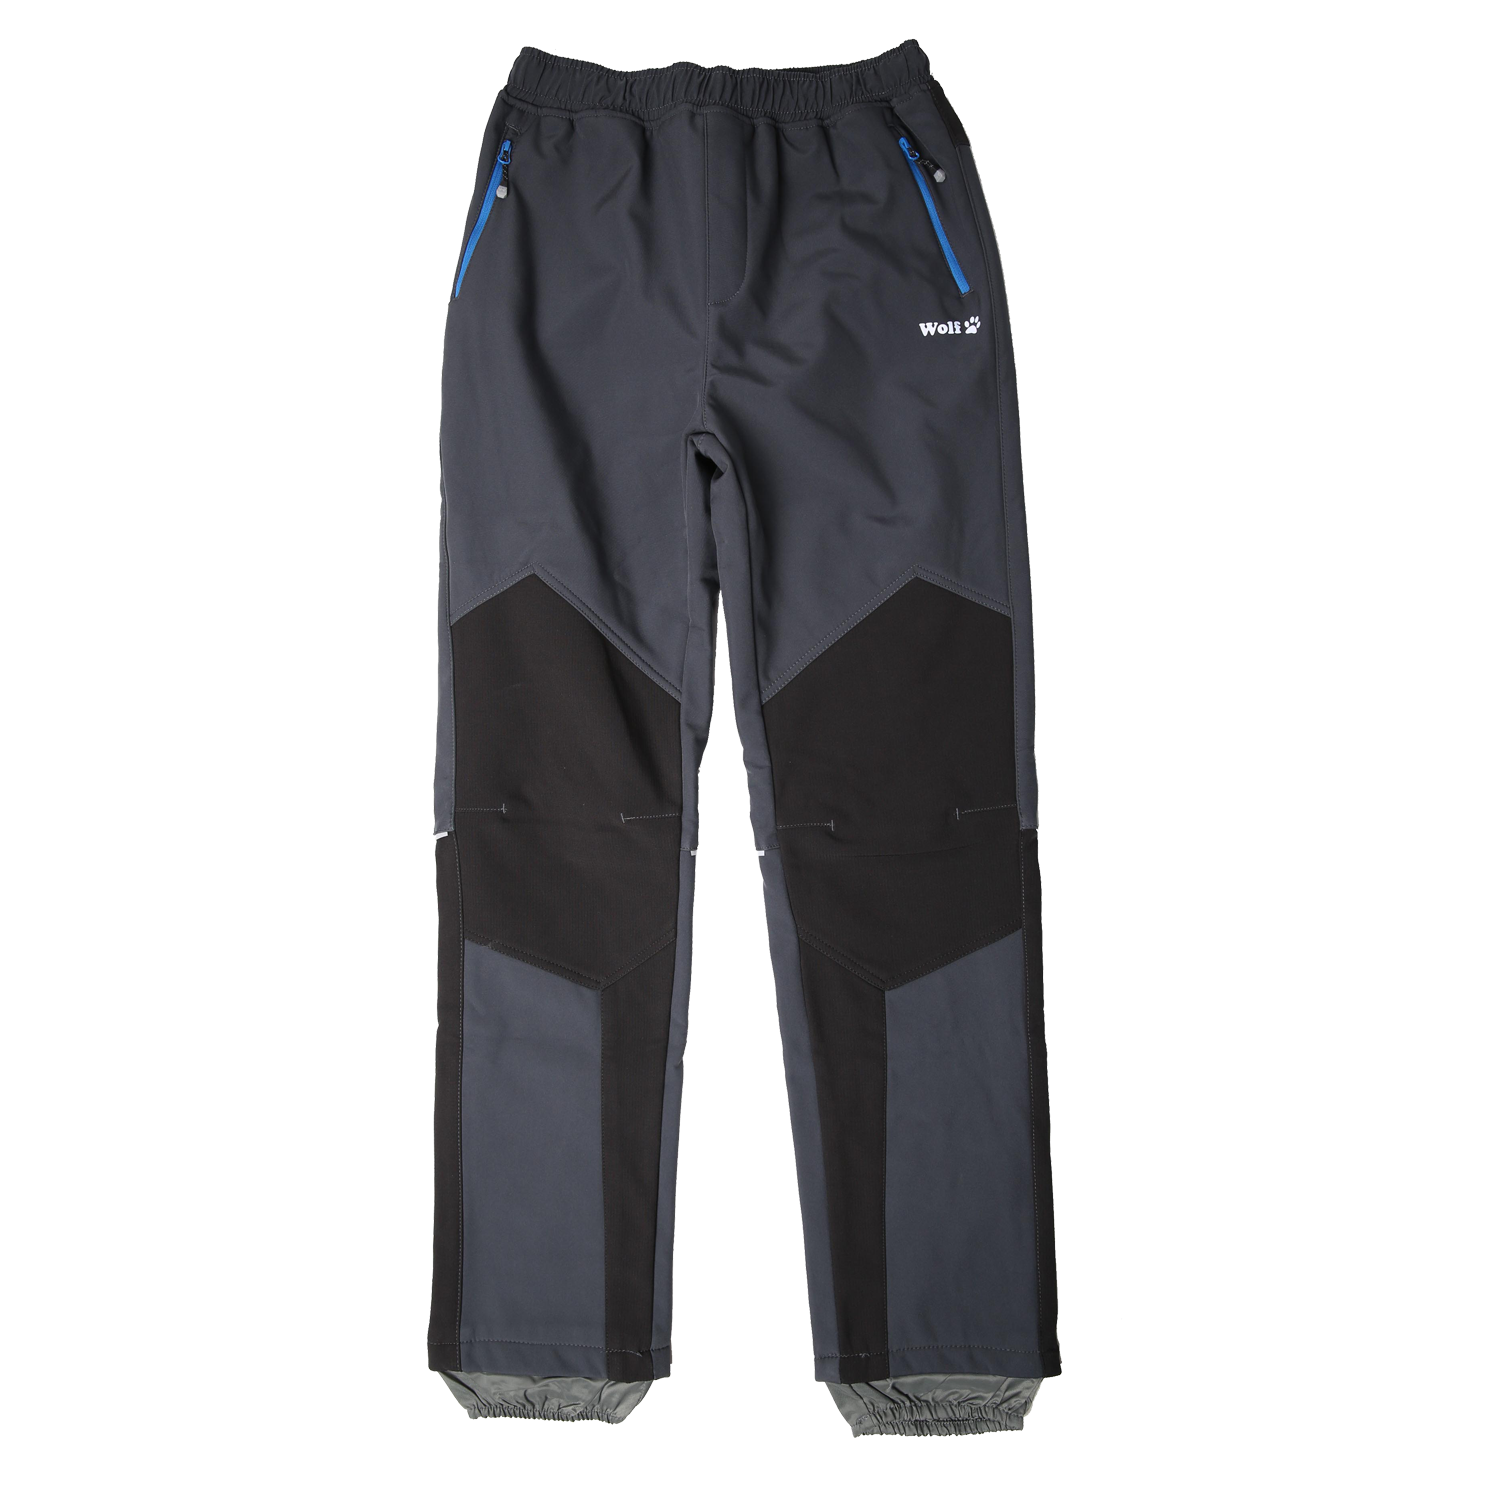 Chlapecké softshellové kalhoty, zateplené - Wolf B2297, šedá/ černá kolena Barva: Šedá, Velikost: 146